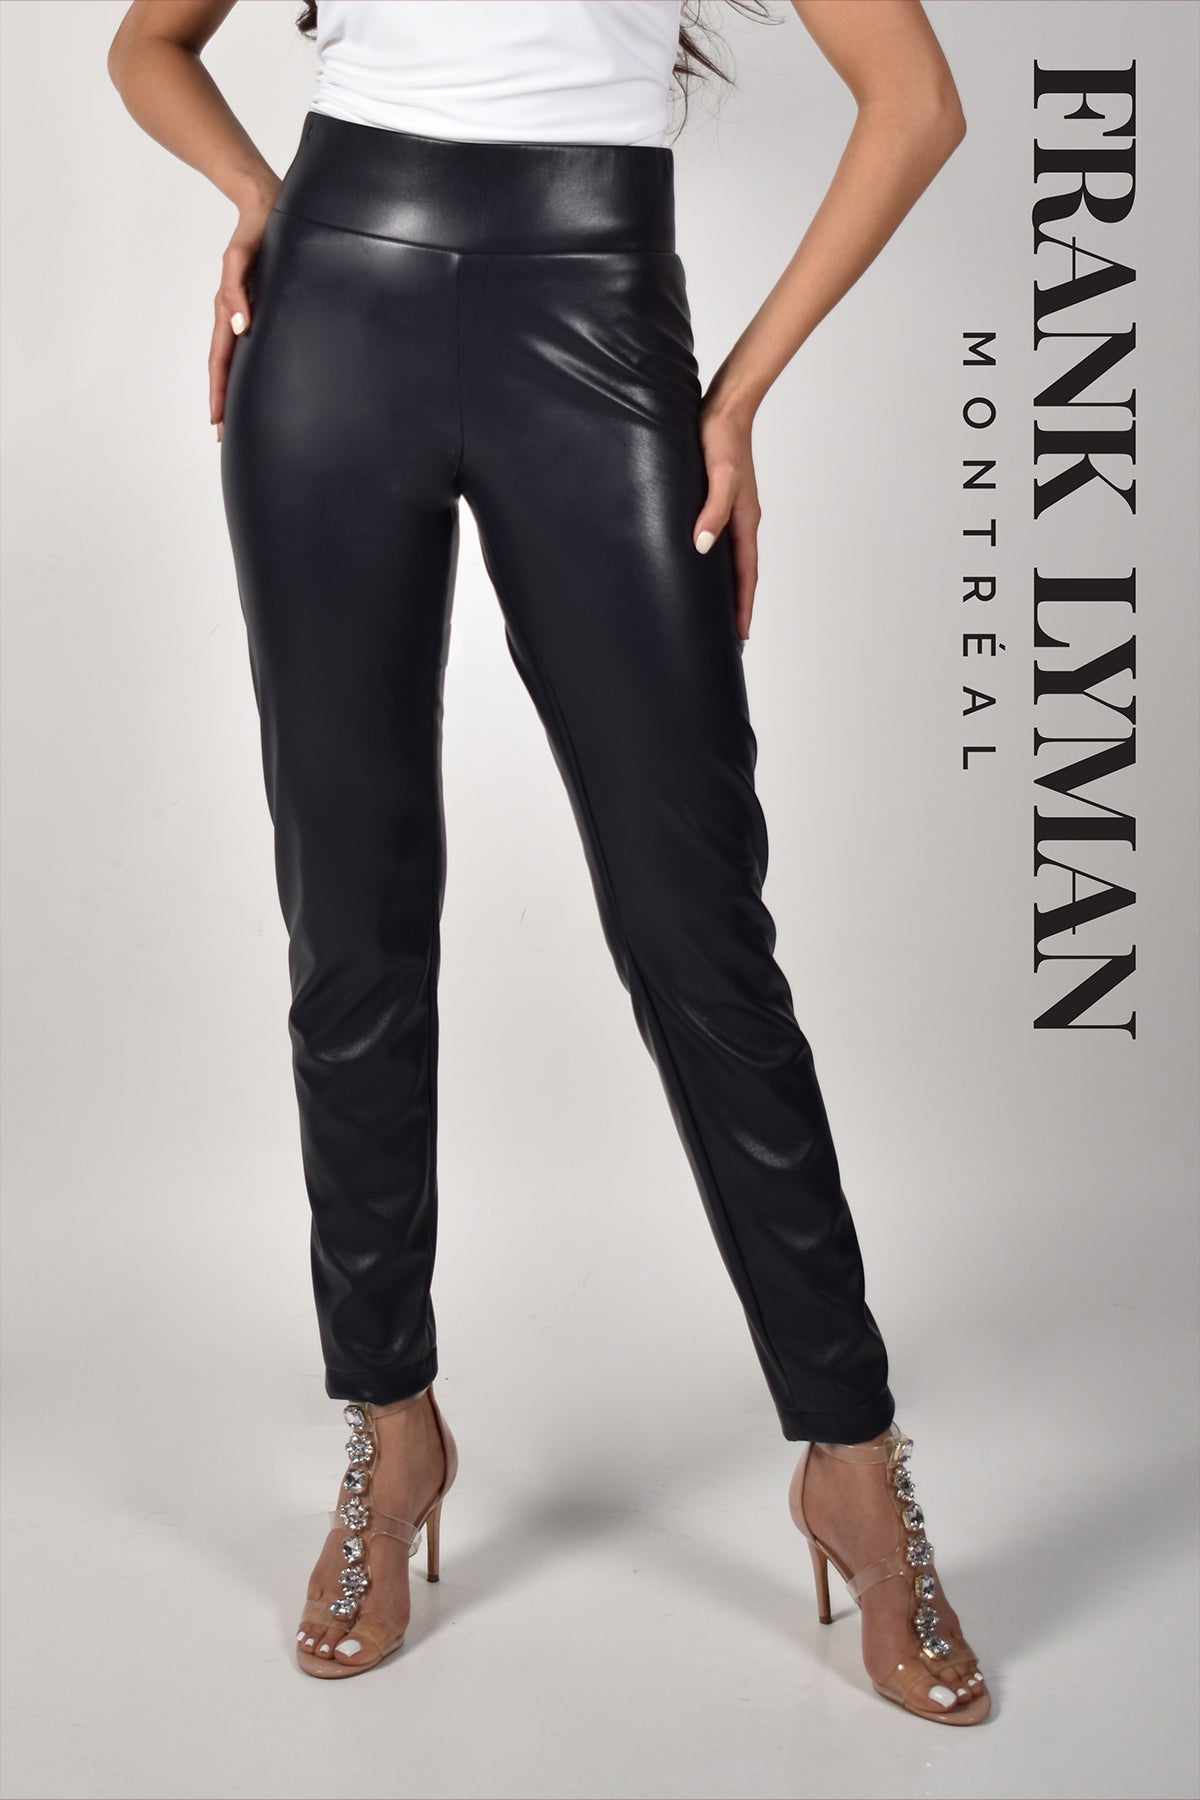 Frank Lyman Montreal Pants-Buy Frank Lyman Montreal Clothing Online-Frank Lyman Montreal Leather Pants-Frank Lyman Montreal Jeans-Frank Lyman Montreal Online Shop